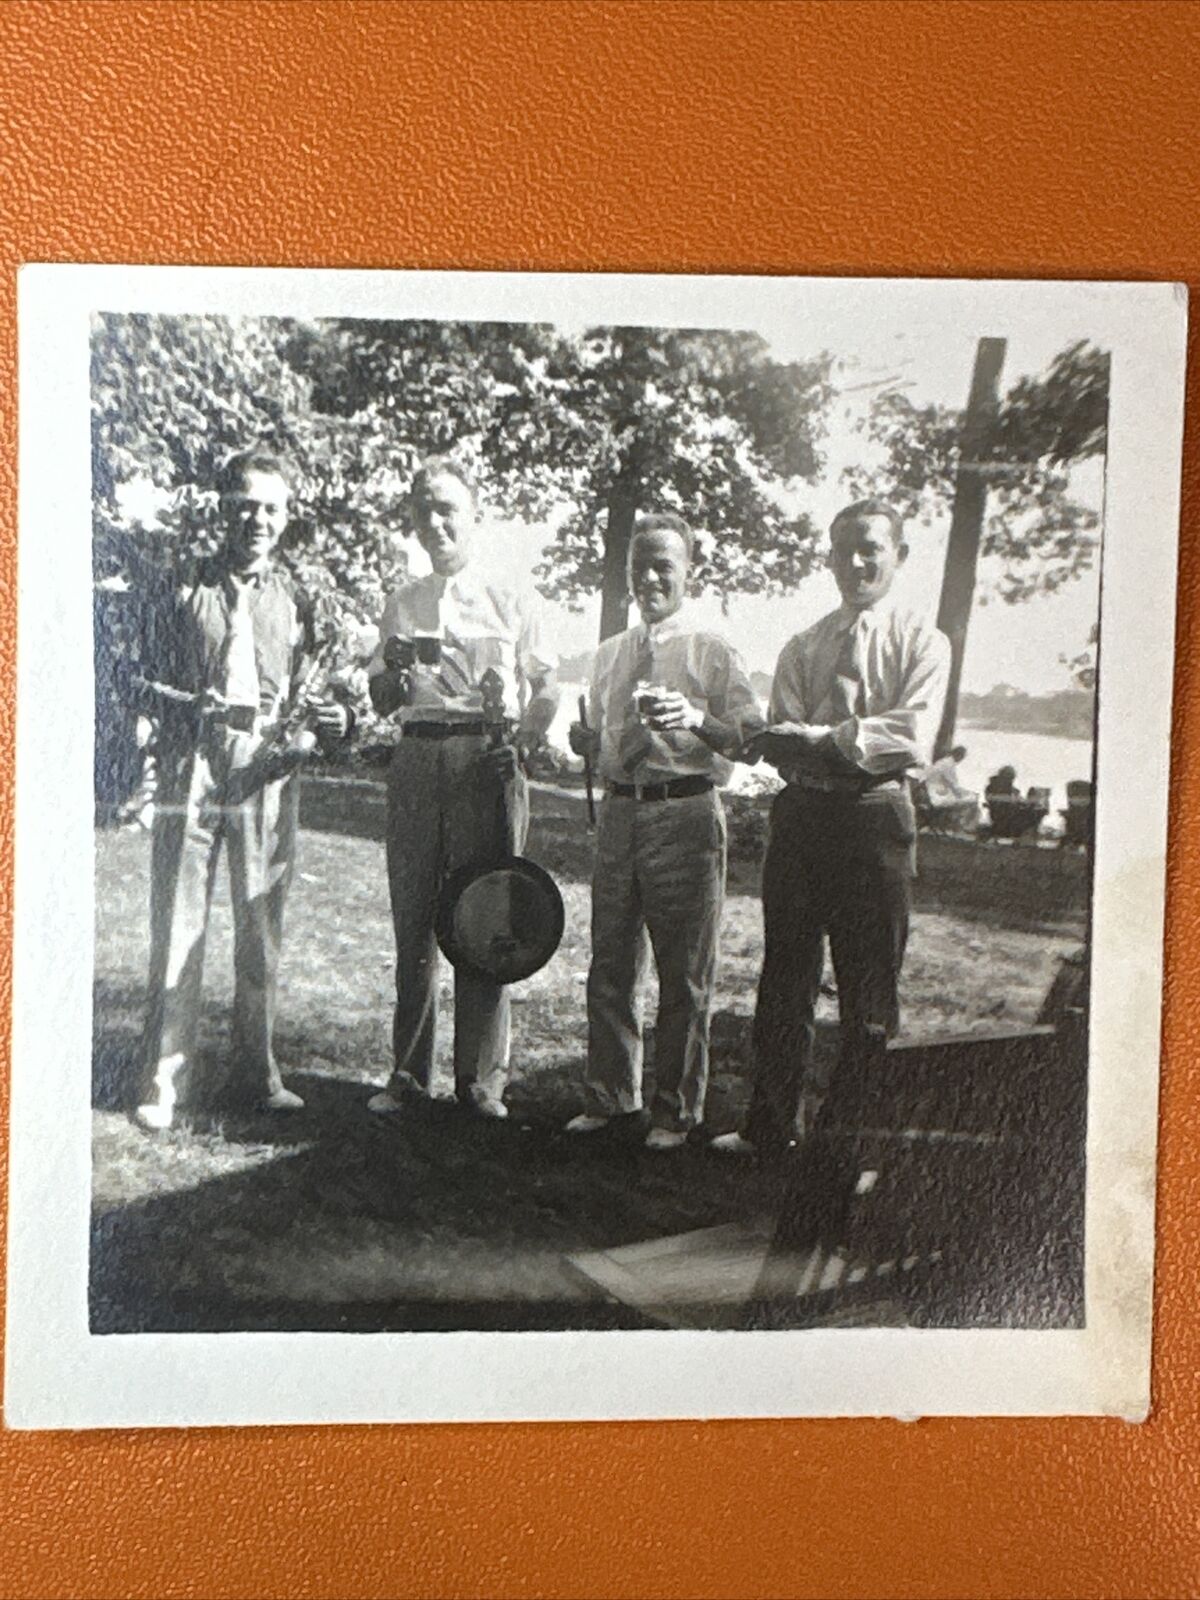 VINTAGE PHOTO Original Four Men Drinking Beer, One With Musical Banjo Instrument